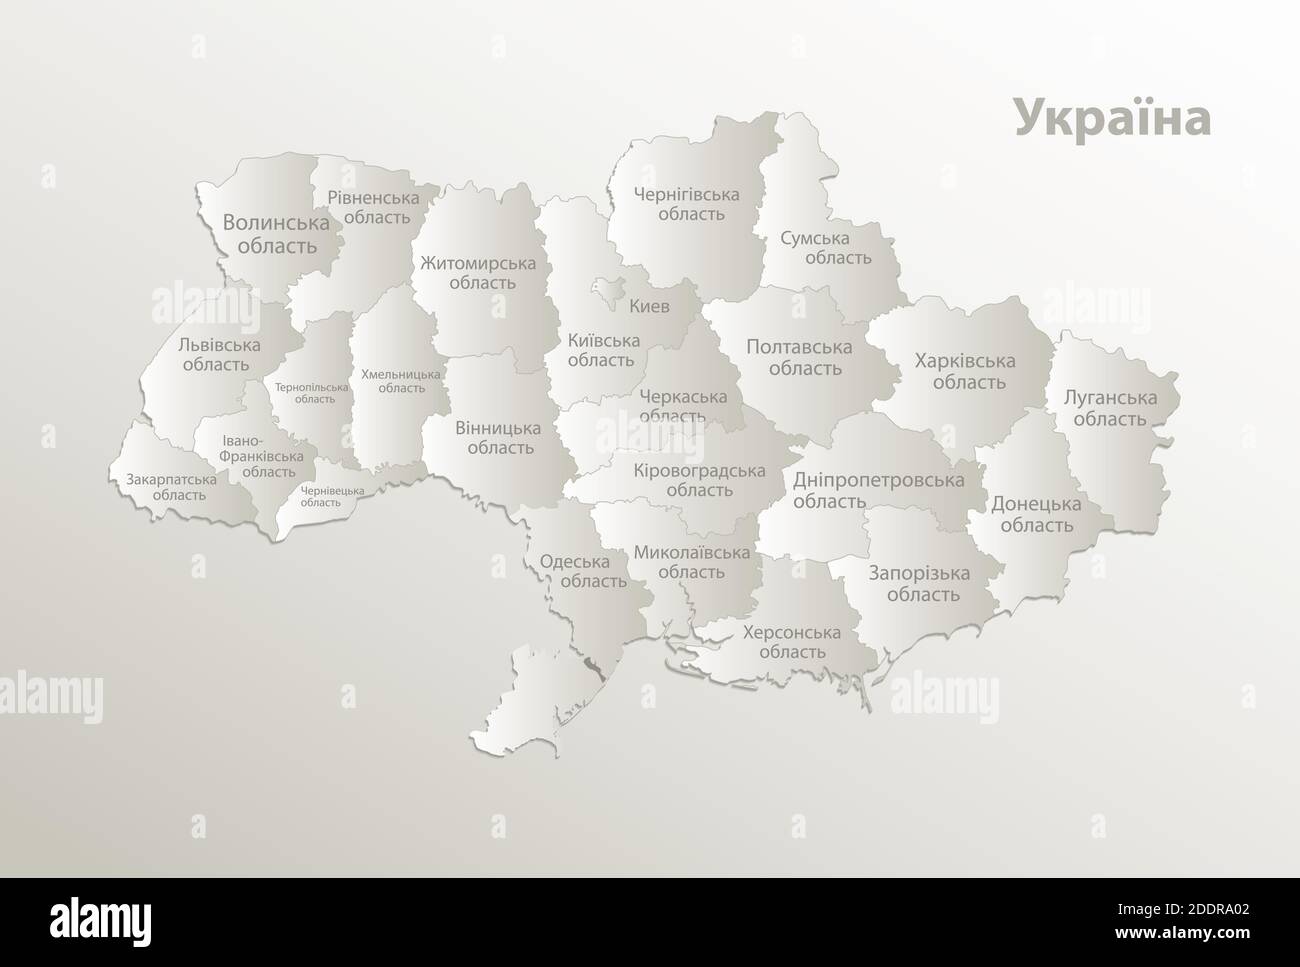 Map of Ukraine, Ukrainian language names of individual regions written in Cyrillic alphabet, administrative divisions separating regions, 3D natural p Stock Vector